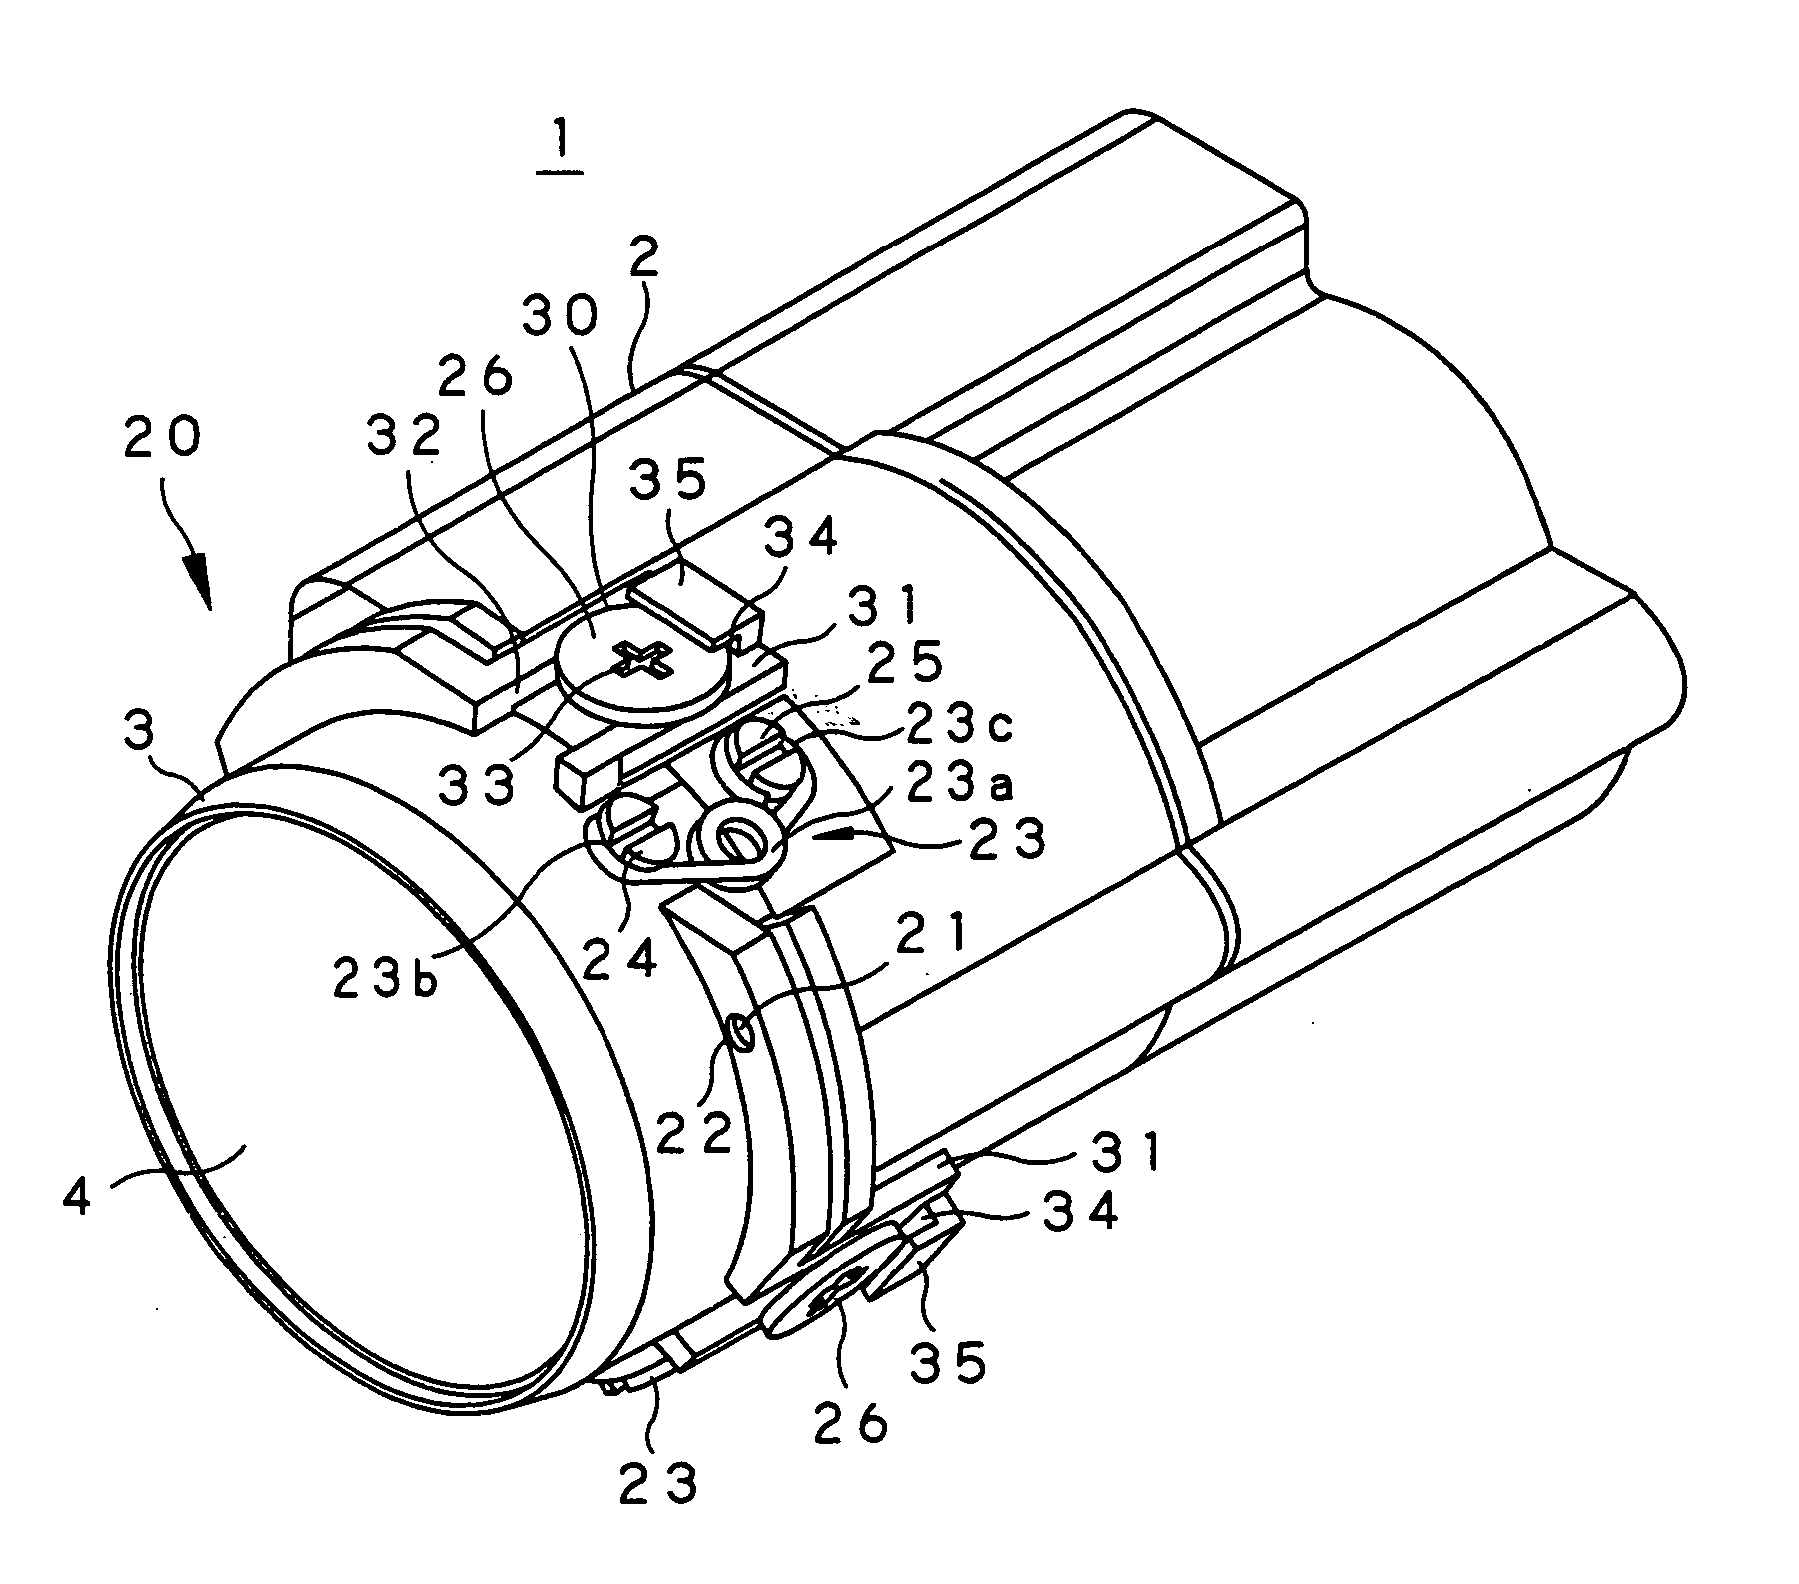 Lens centering mechanism, lens apparatus and imaging apparatus